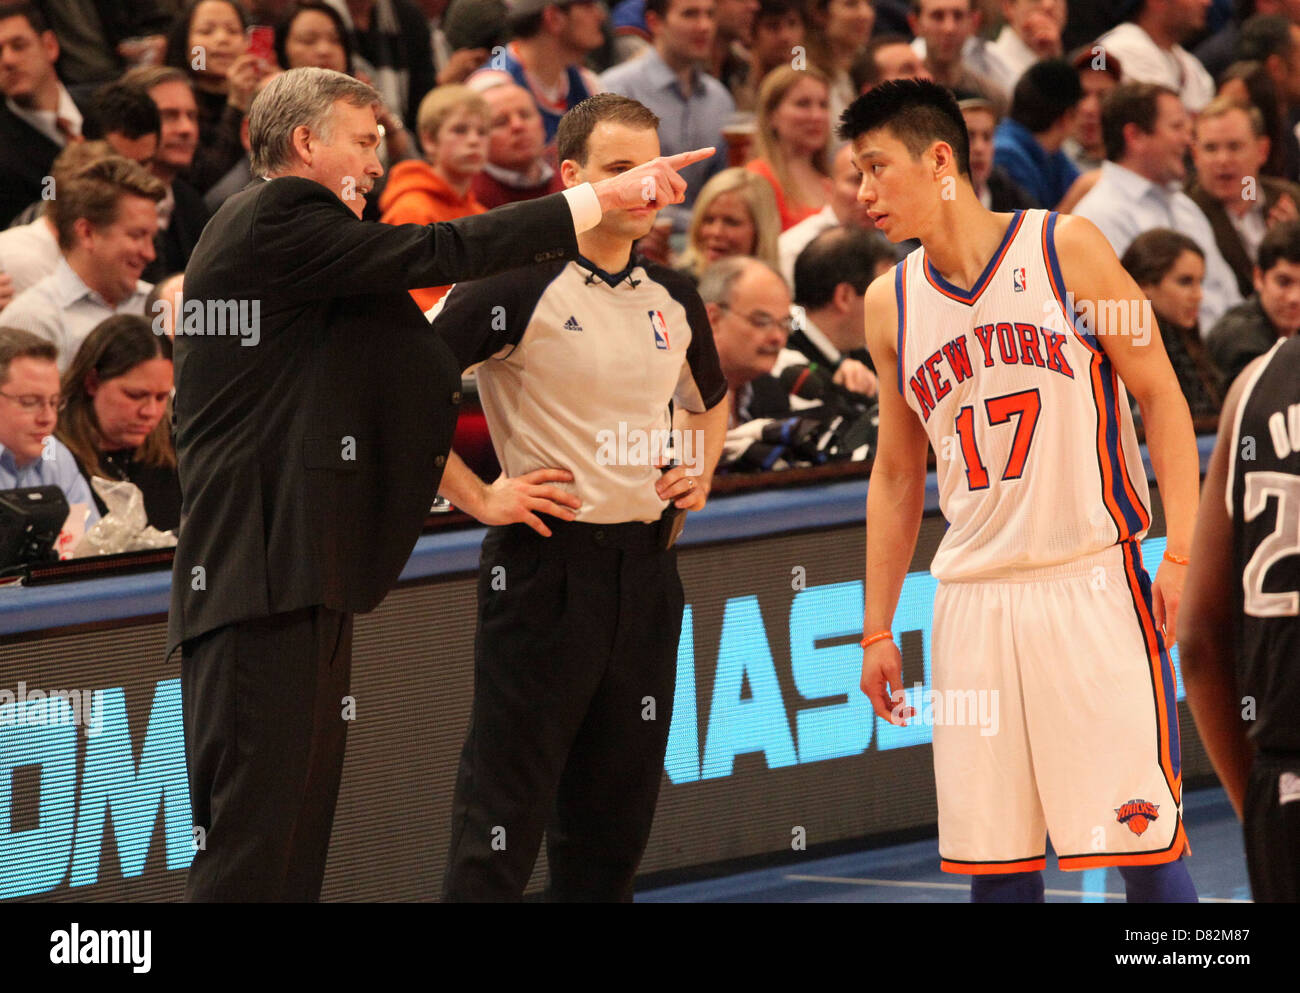 Jeremy Lin New York Knicks Vs Sacramento Kings at Madison Square Garden New York City, USA - 15.02.12 Stock Photo